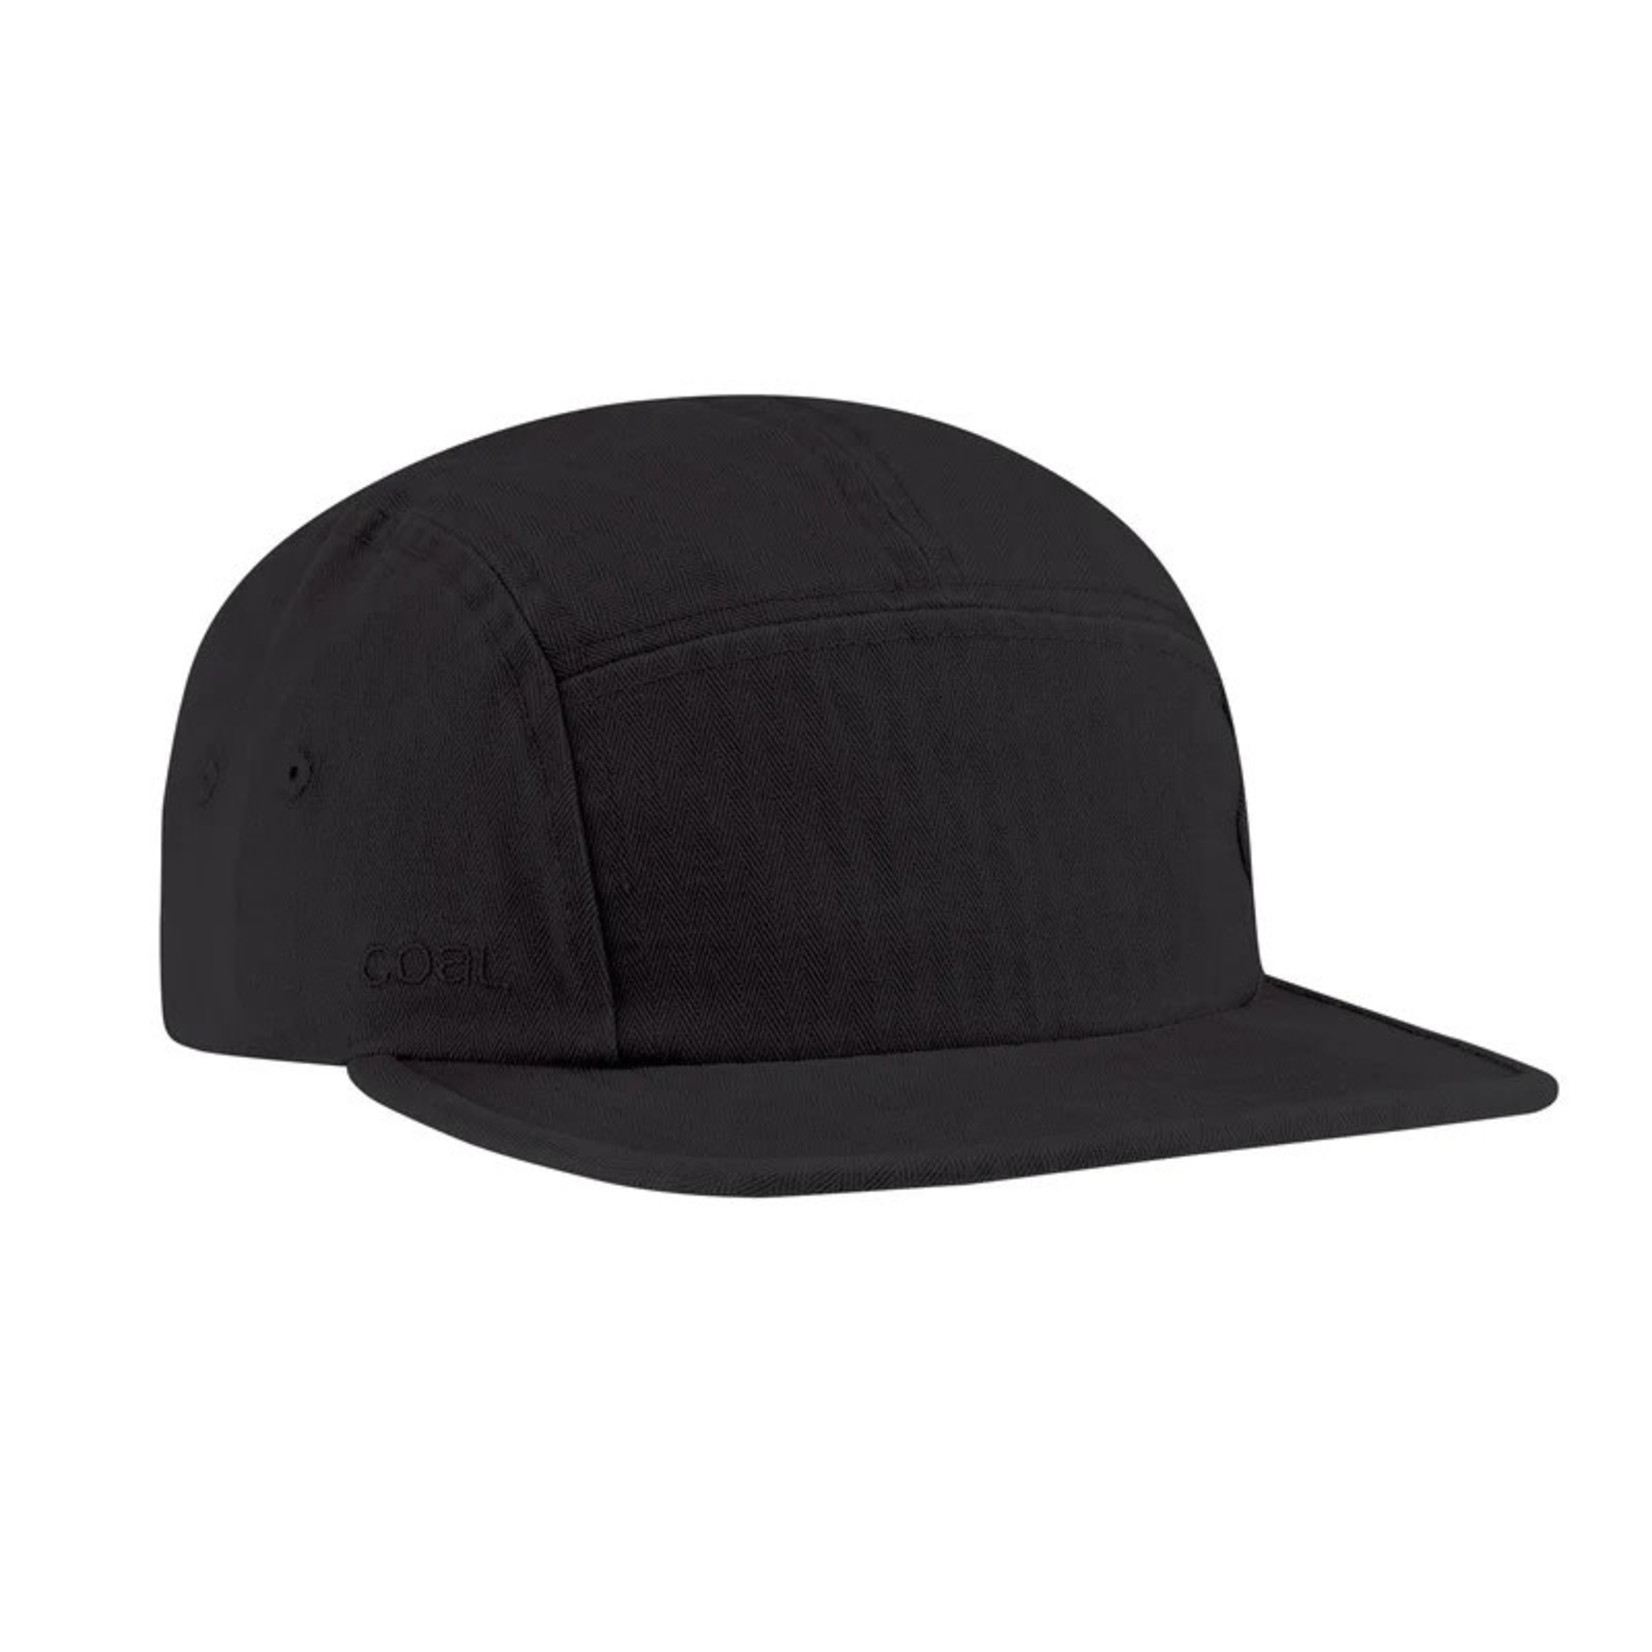 Coal Headwear Coal Edison Hat - Black